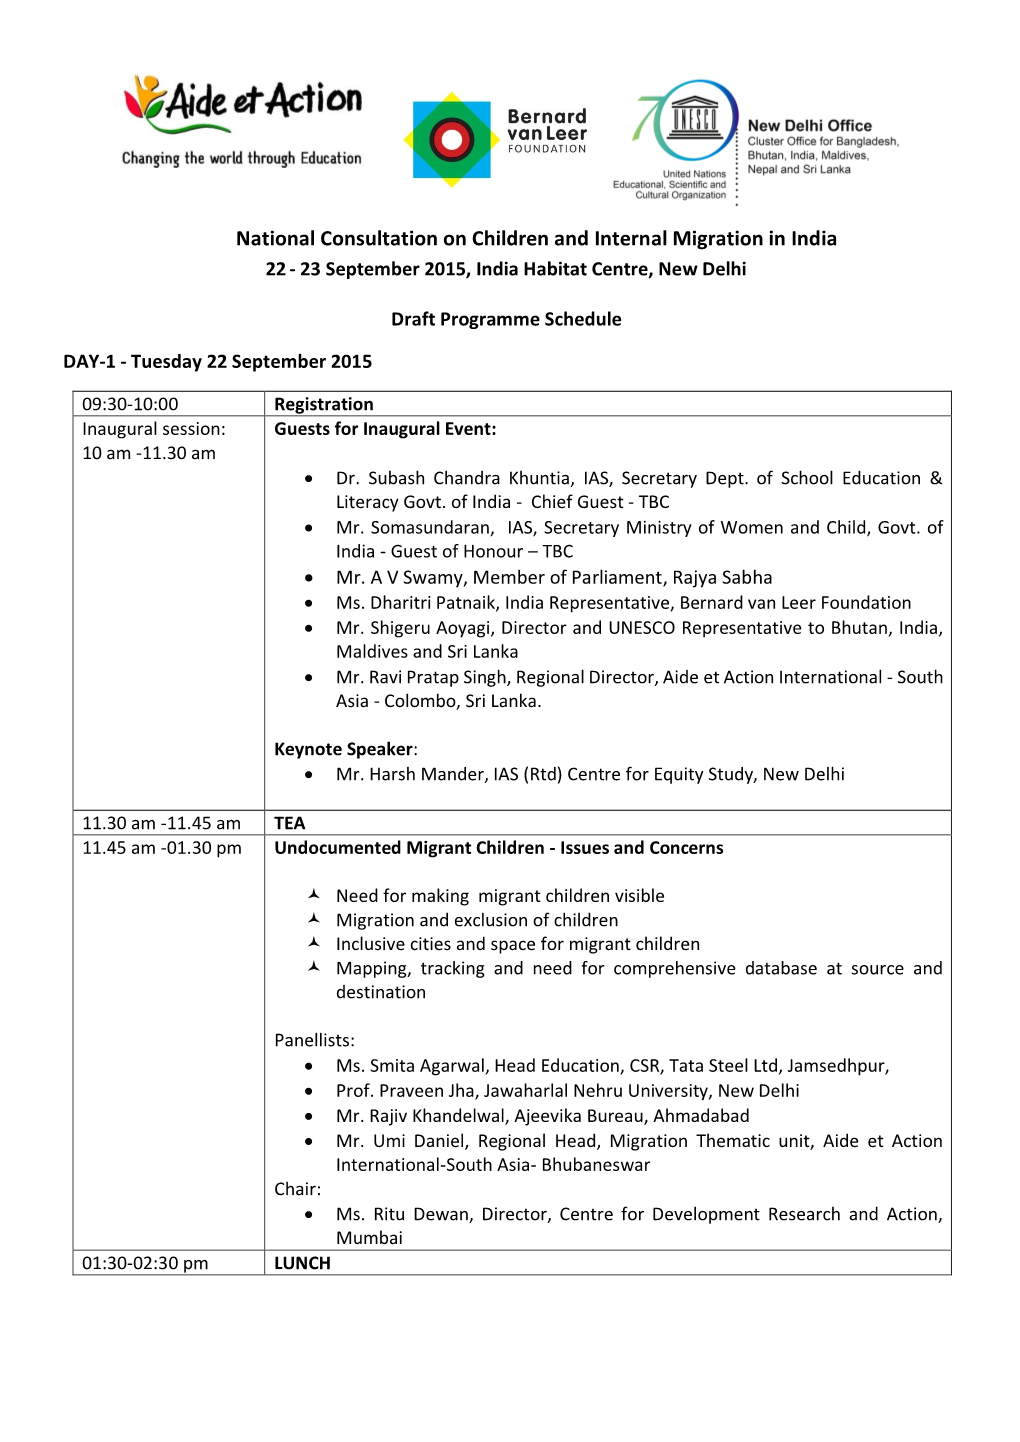 National Consultation on Children and Internal Migration in India 22 - 23 September 2015, India Habitat Centre, New Delhi